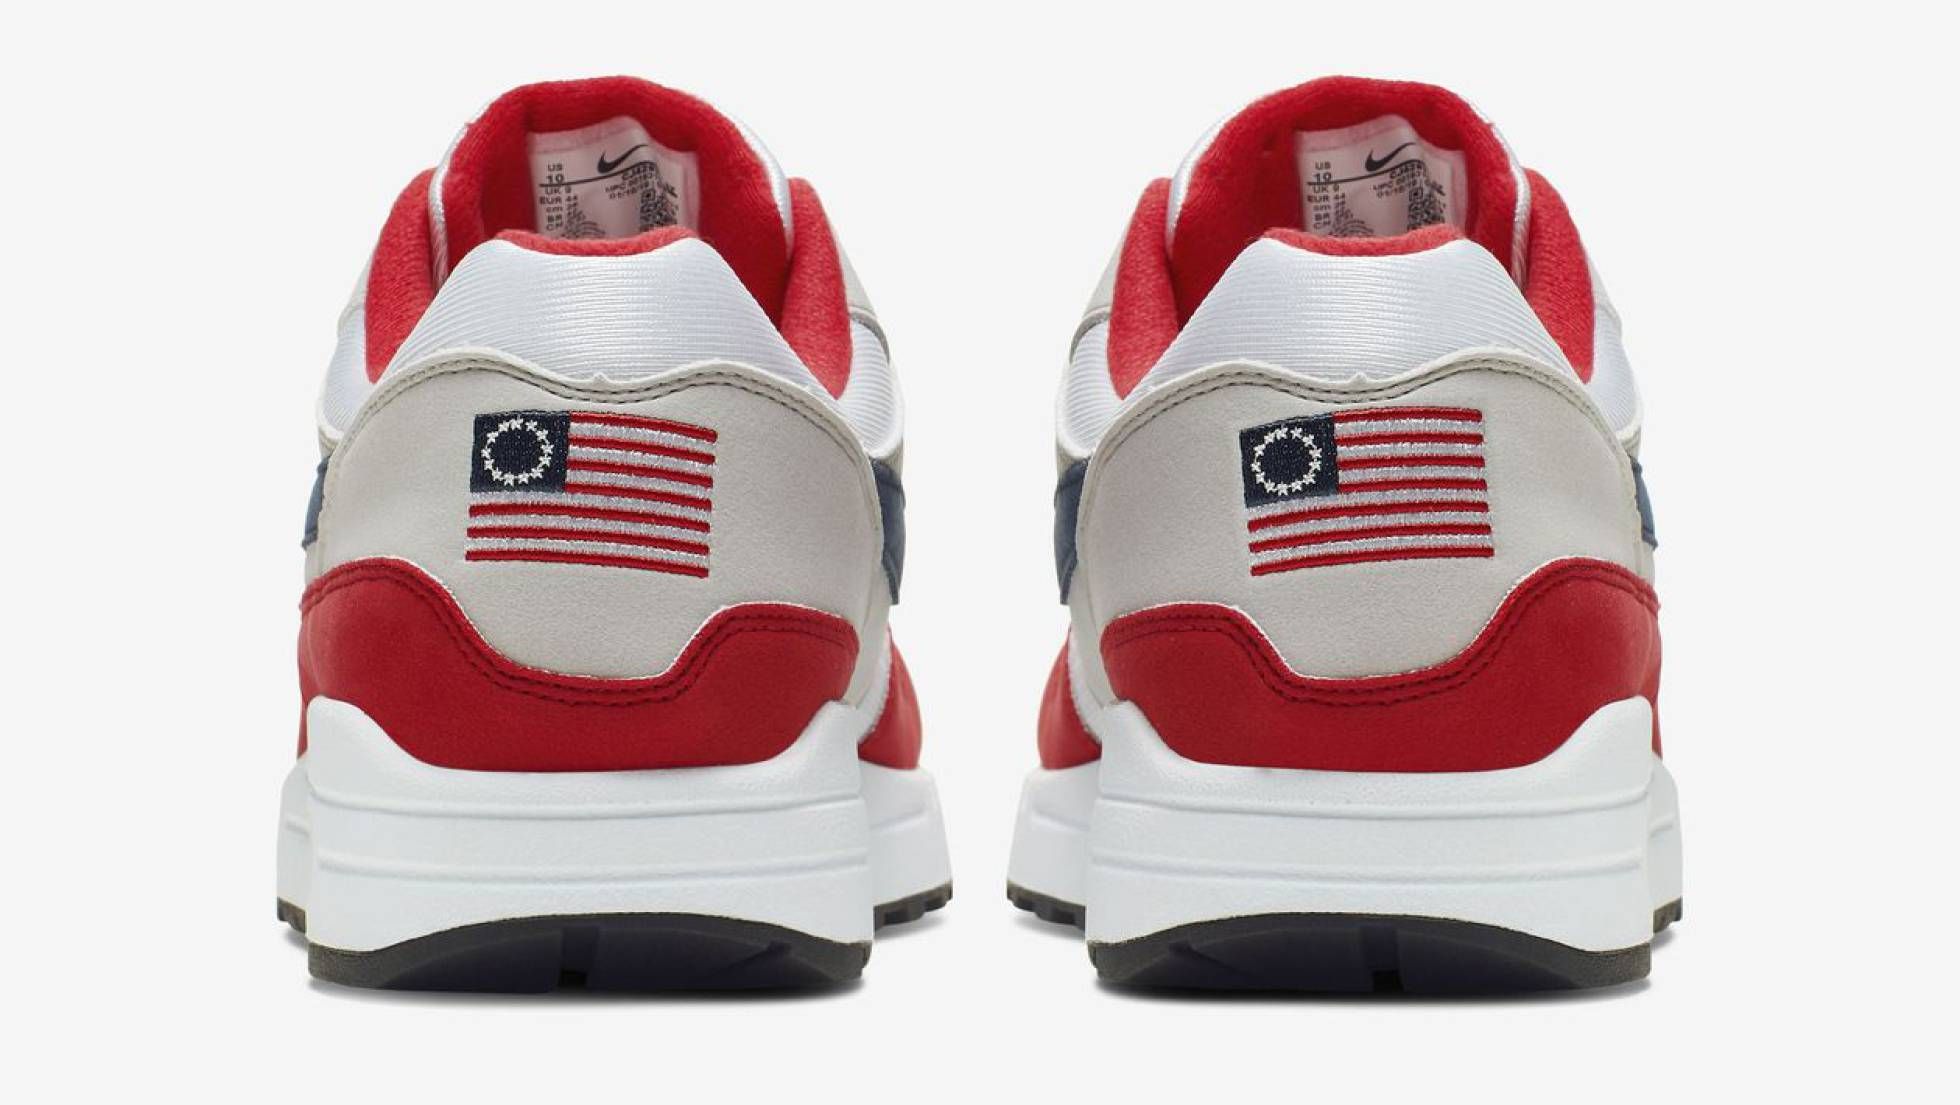 Basura silencio espiritual Nike retira sus 'ofensivas' Nike Air Max 1 USA por racistas